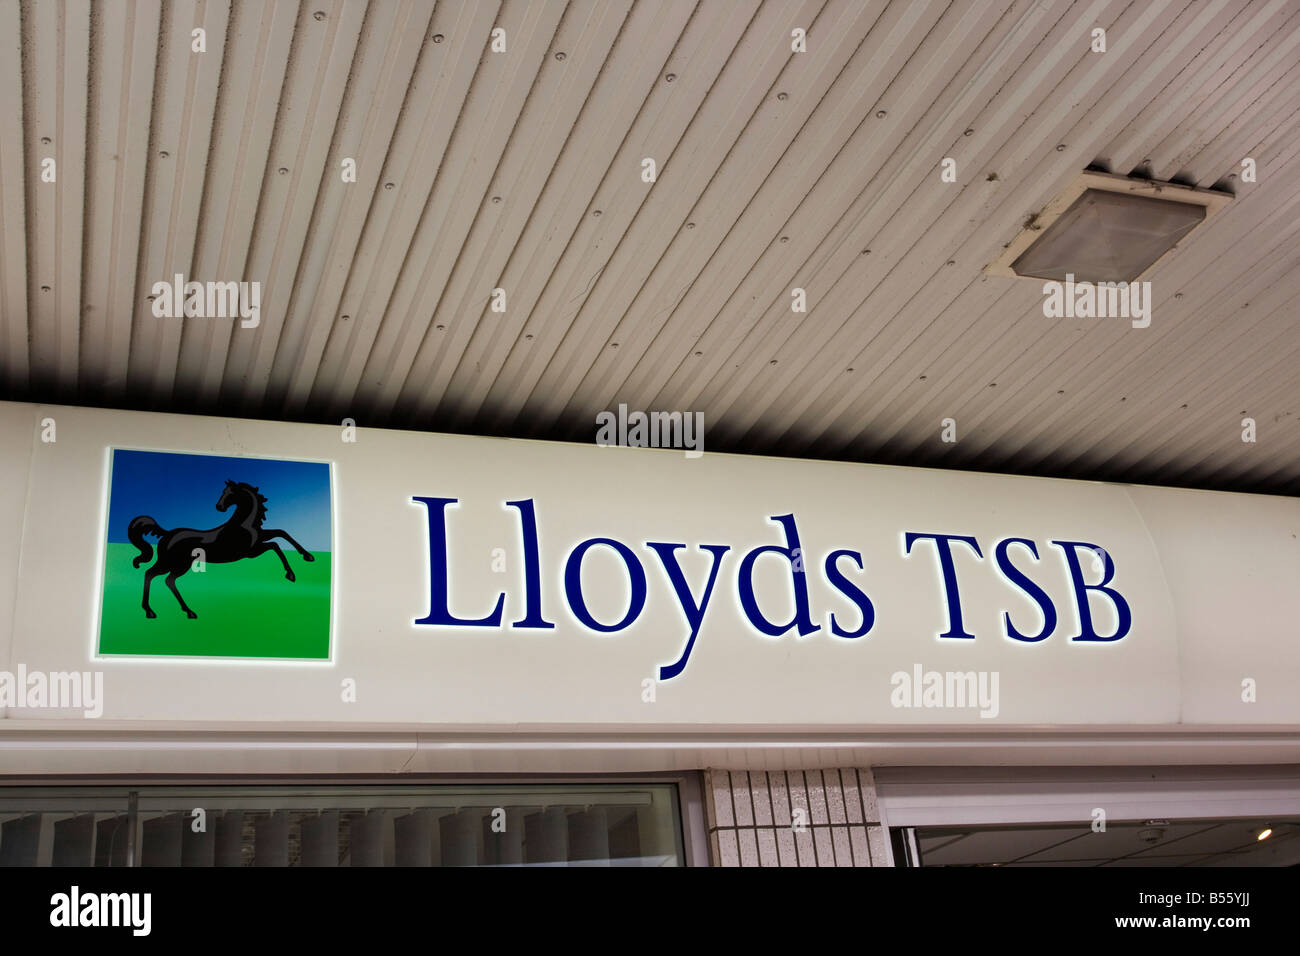 Lloyds TSB bank sign above entrance Stock Photo